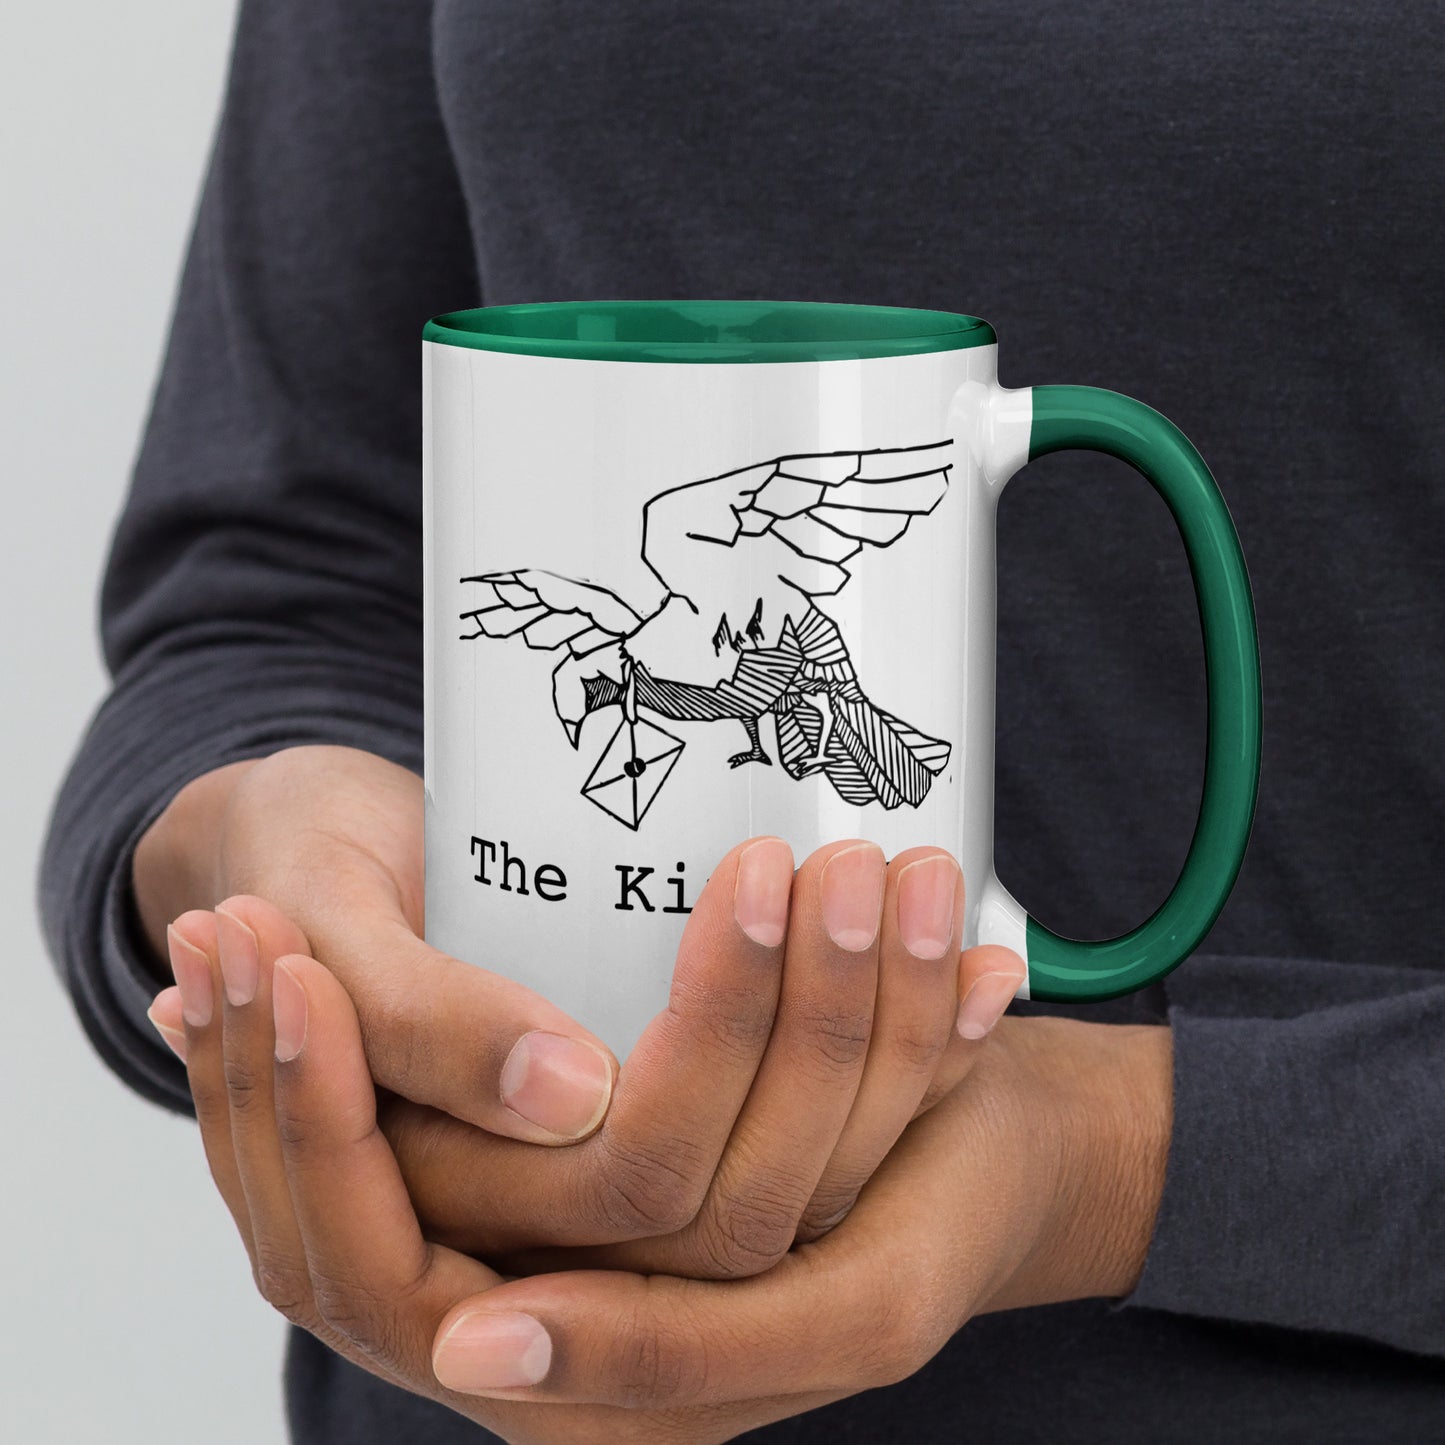 The Kintners Logo Mug With Color Inside